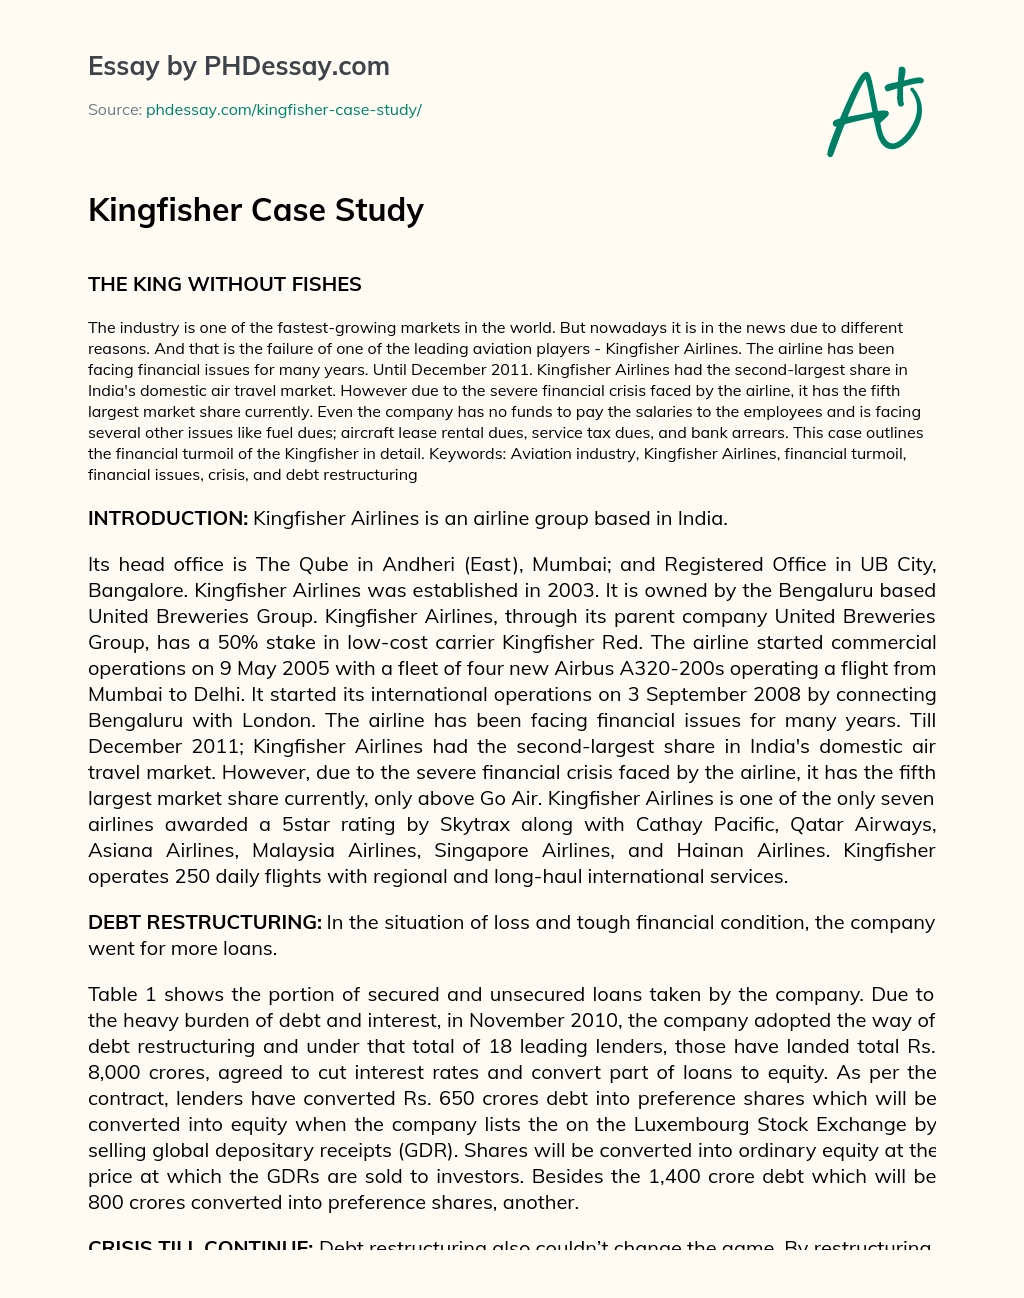 Kingfisher Case Study essay